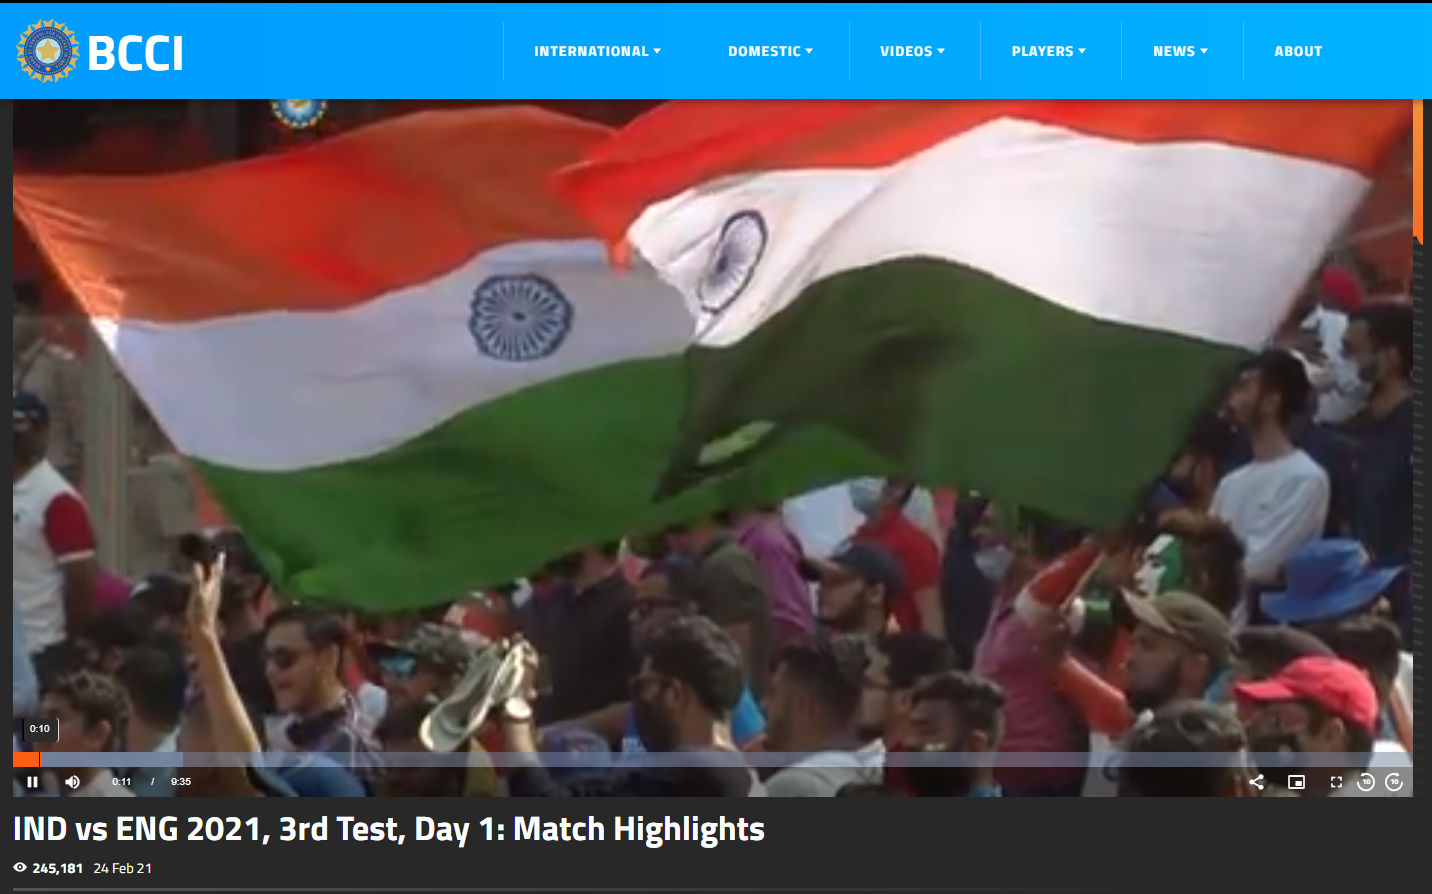 IND vs ENG 2021, 3rd Test, Day 1: Match Highlights at Narendra Modi 